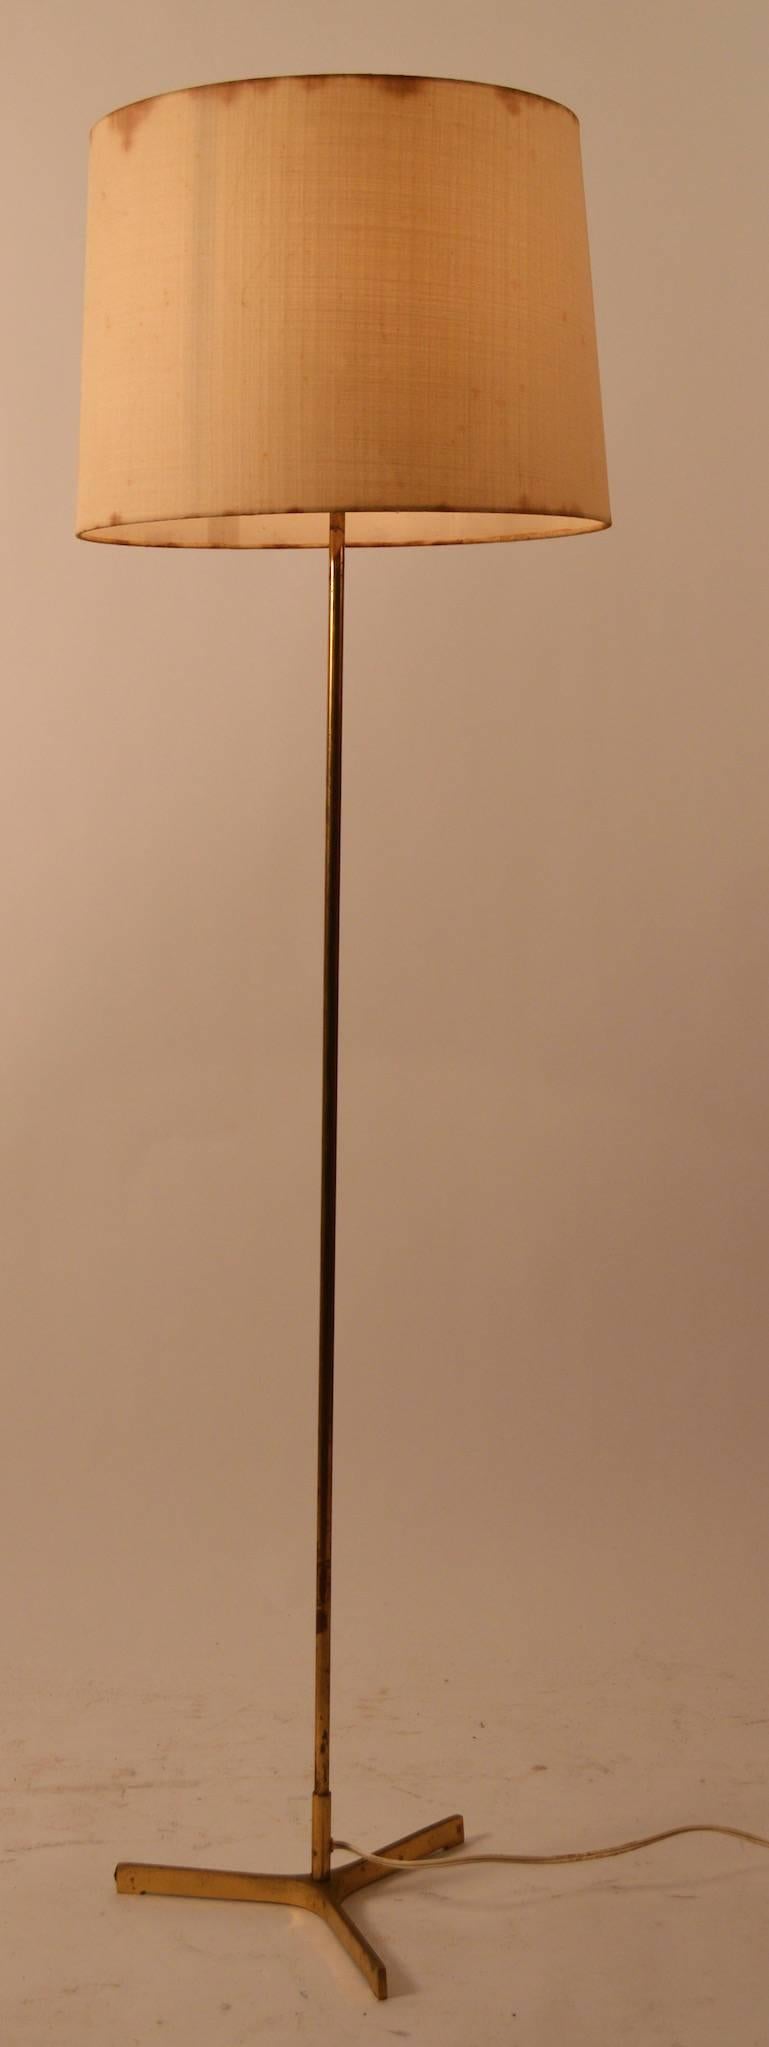 Mid-20th Century Brass Pole Lamp